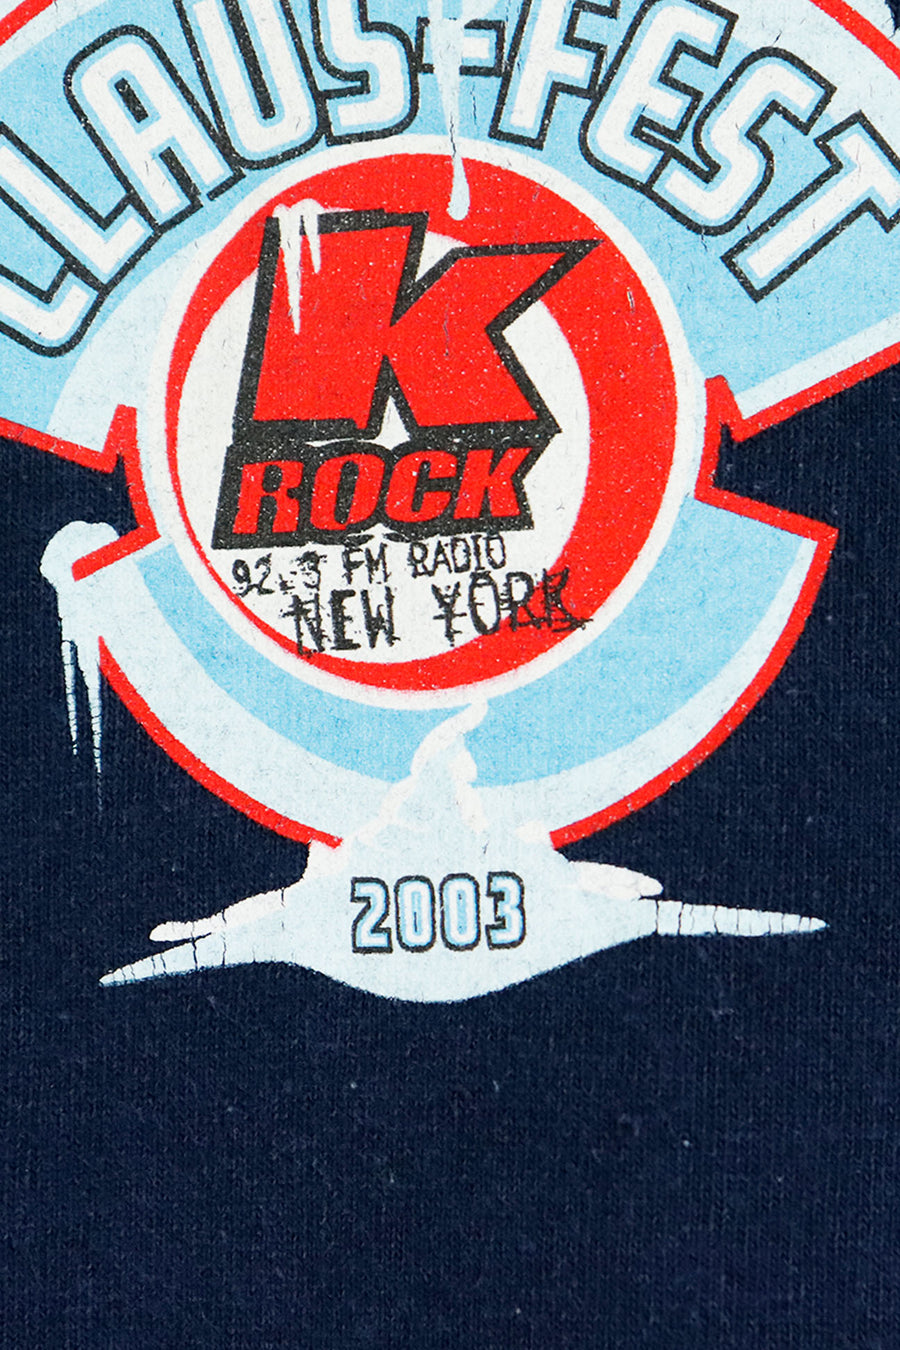 Vintage 2003 Claus-Fest K Rock New York T Shirt Sz XL